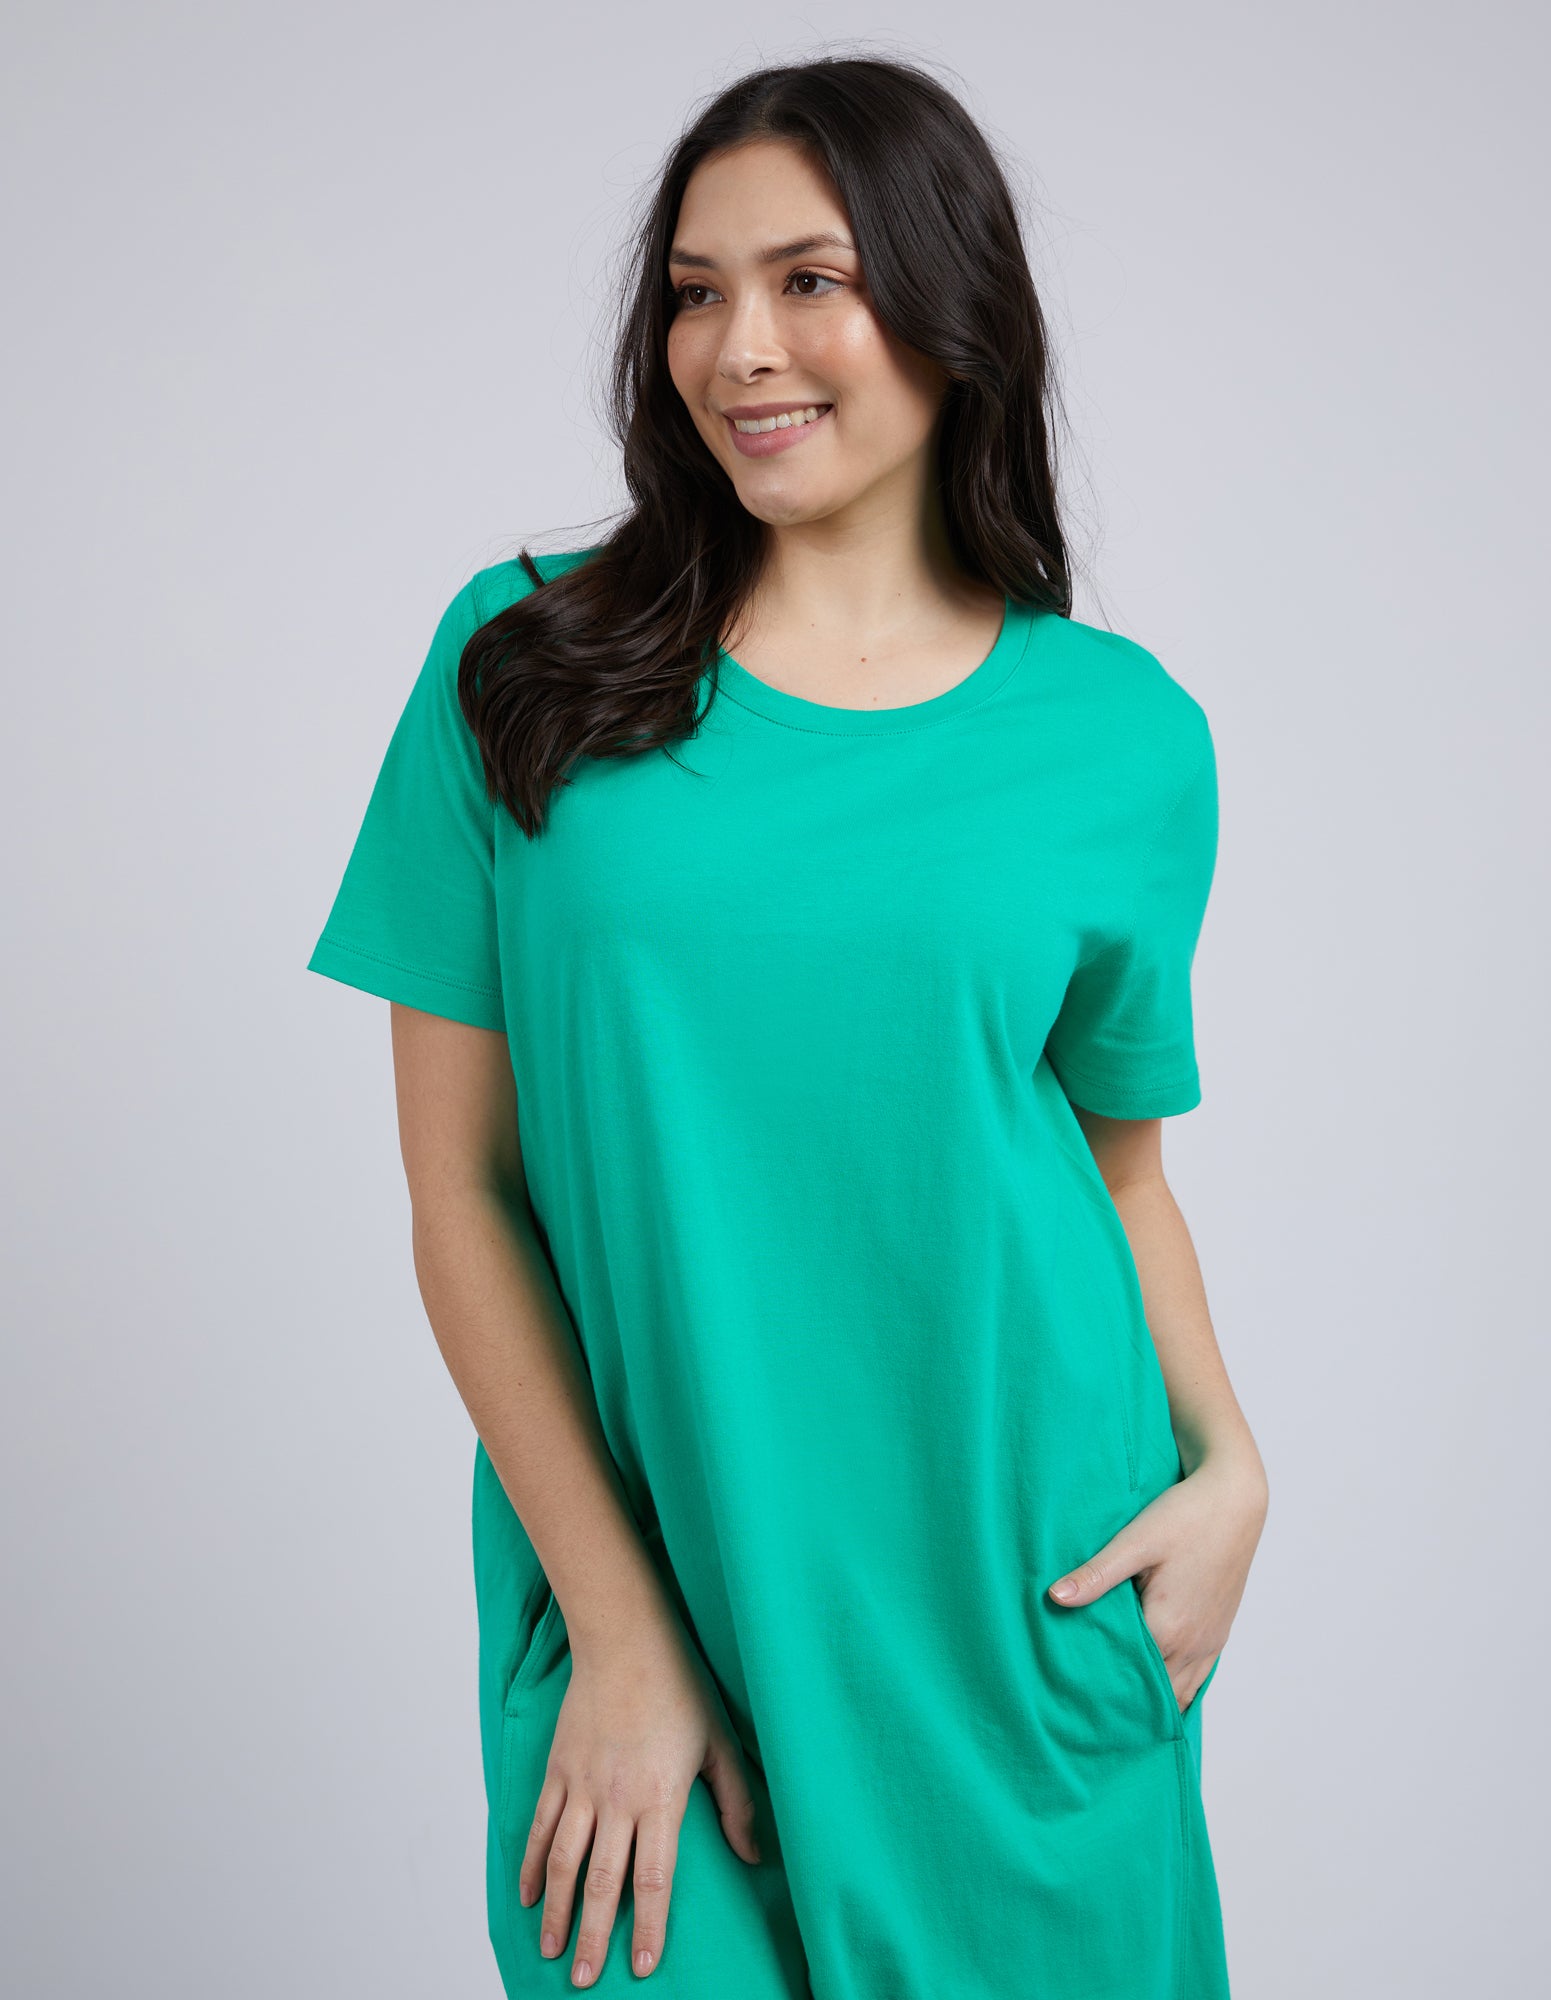 Adira Dress - Bright Green - Elm Lifestyle